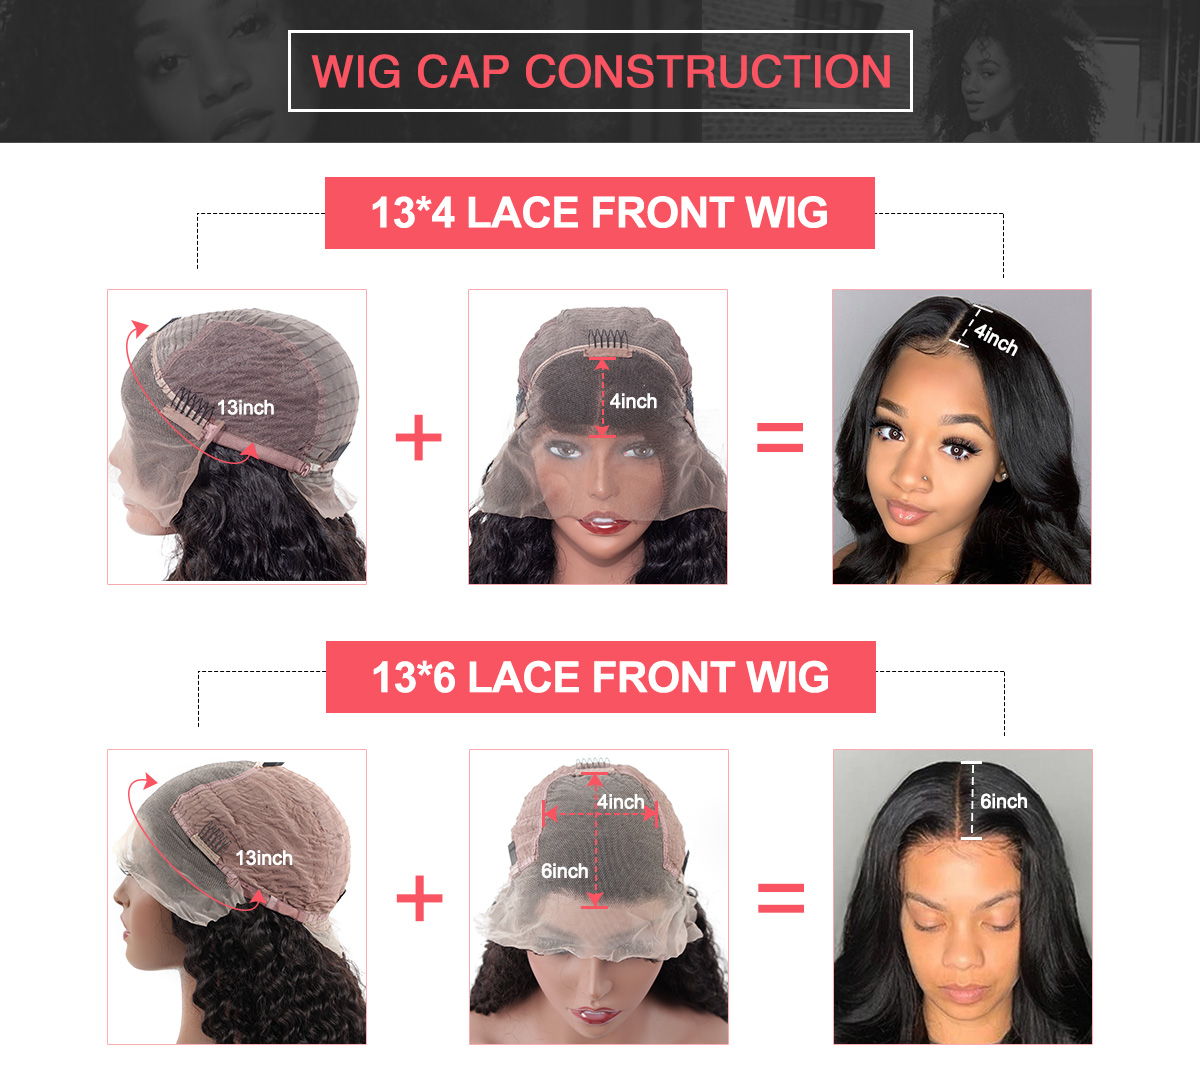 13x4 vs 13x6 frontal wig